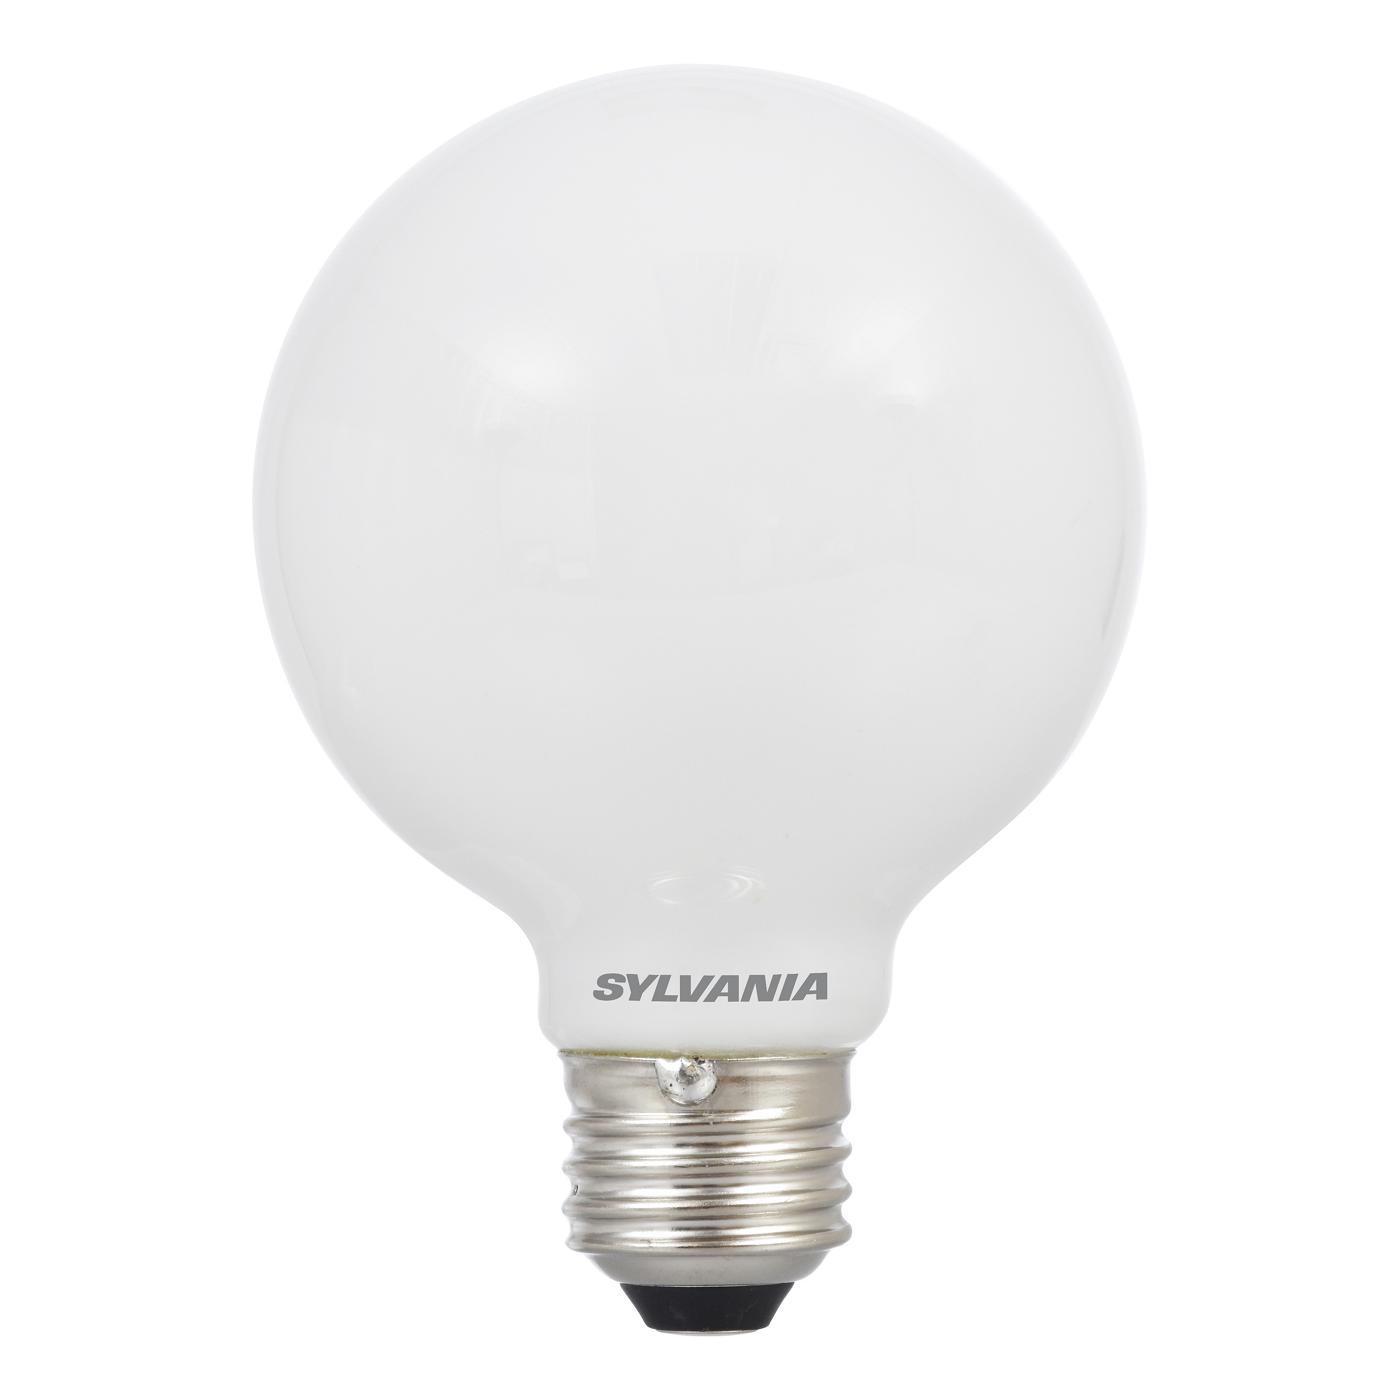 Sylvania ECO G25 40-Watt Frosted LED Light Bulbs - Daylight; image 2 of 2